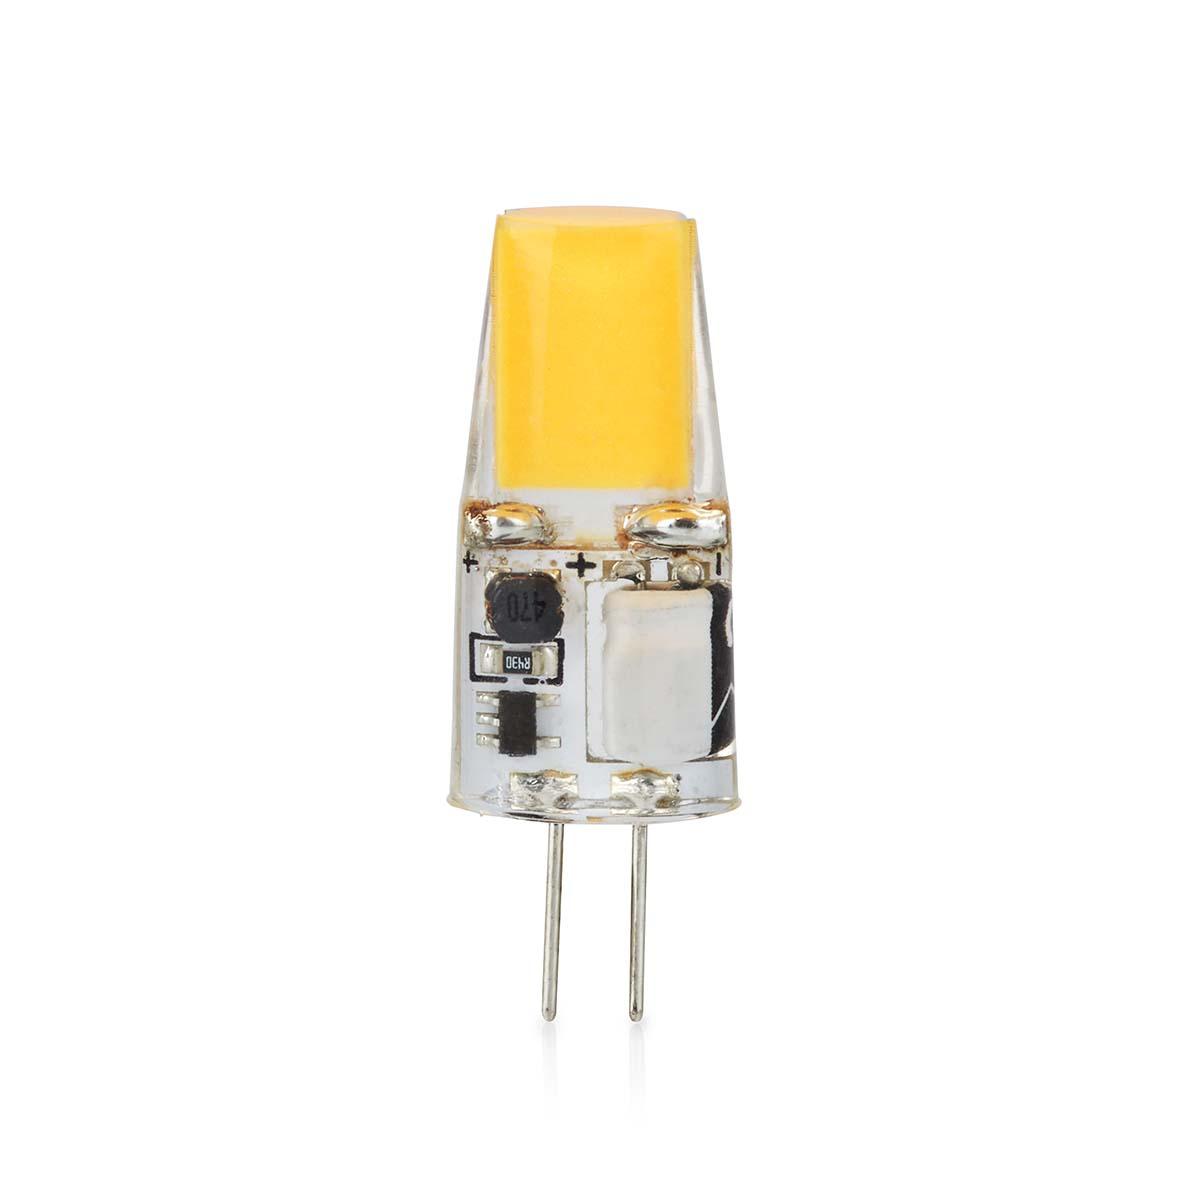 Lampe g4 led format mini 12v 2w 200lm 3000k